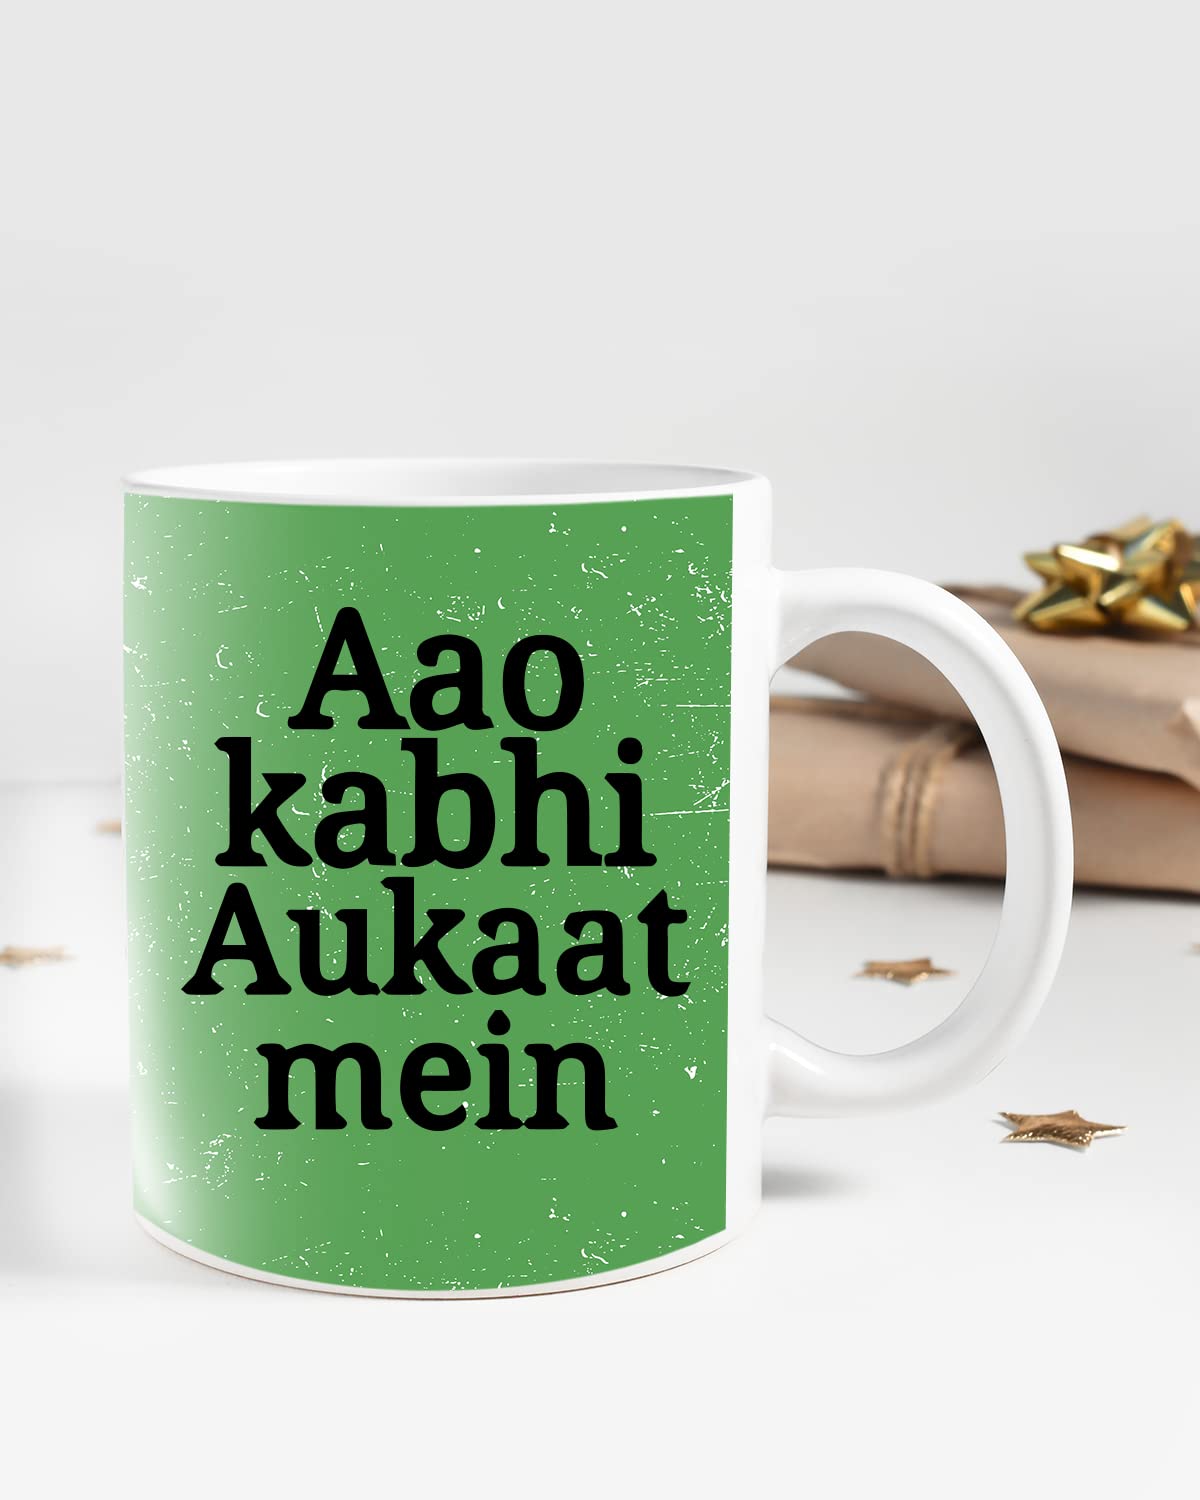 AAO KABHI AUKAAT Mein Coffee Mug - Gift for Friend, Birthday Gift, Birthday Mug, Sarcasm Quotes Mug, Mugs with Funny & Funky Dialogues, Bollywood Mugs, Funny Mugs for Him & Her